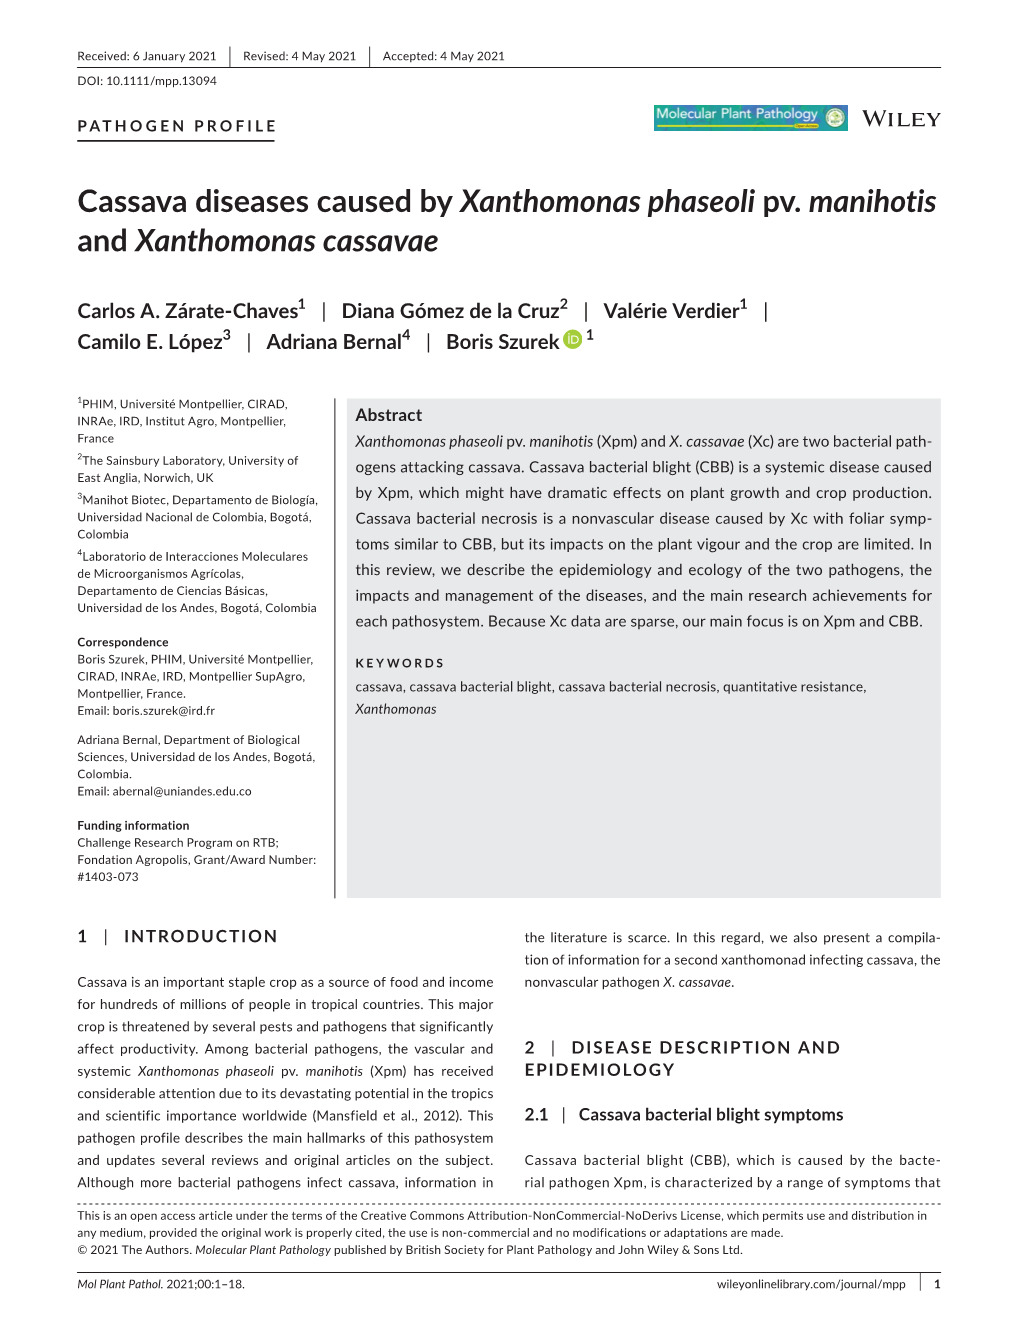 Cassava Diseases Caused by Xanthomonas Phaseoli Pv. Manihotis and Xanthomonas Cassavae